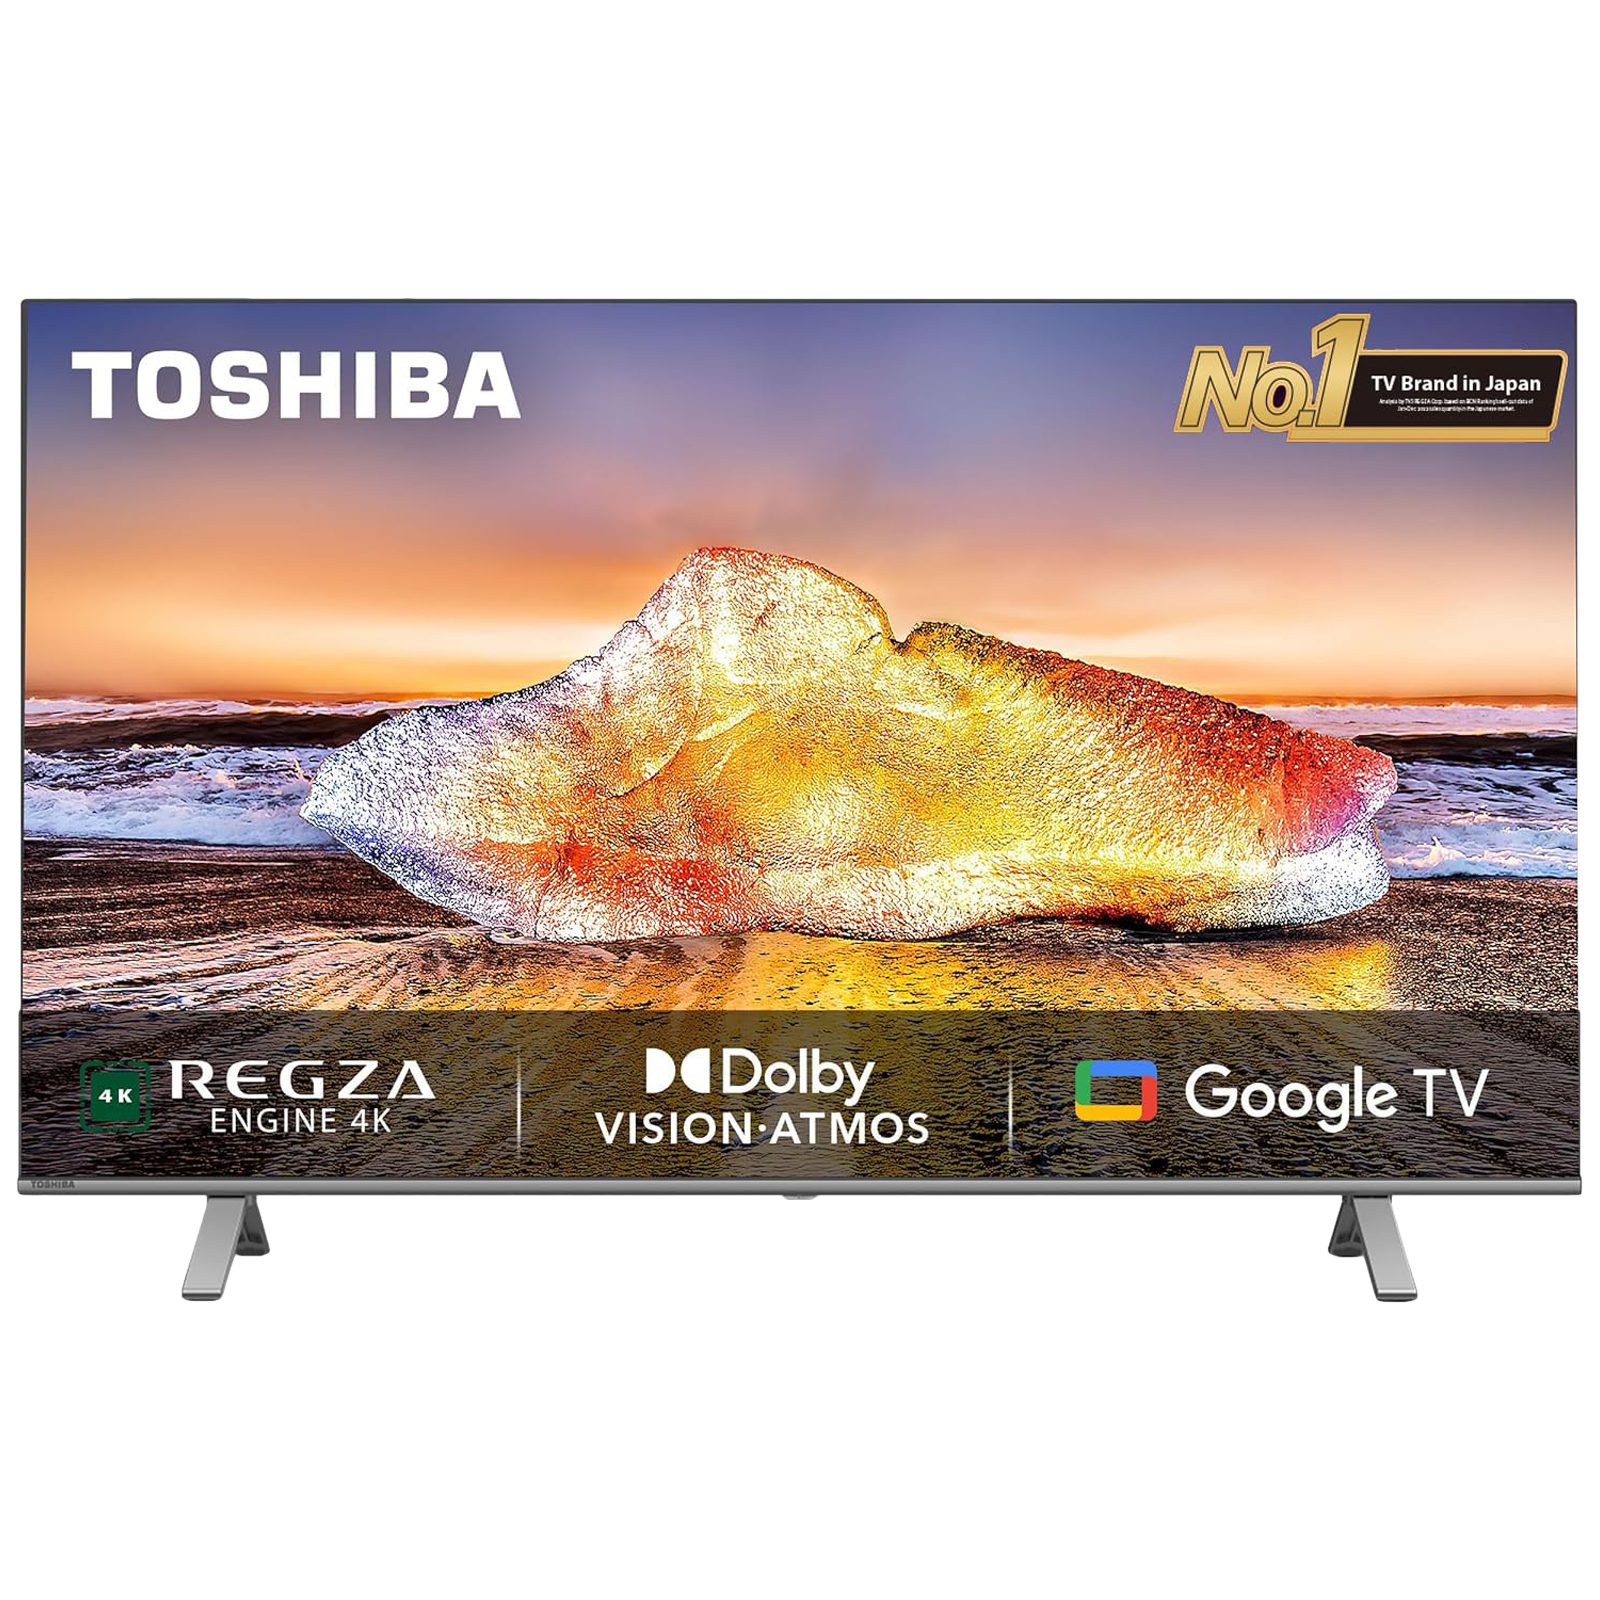 TOSHIBA C350MP 139 cm (55 inch) 4K Ultra HD LED Google TV with Regza Engine  4K